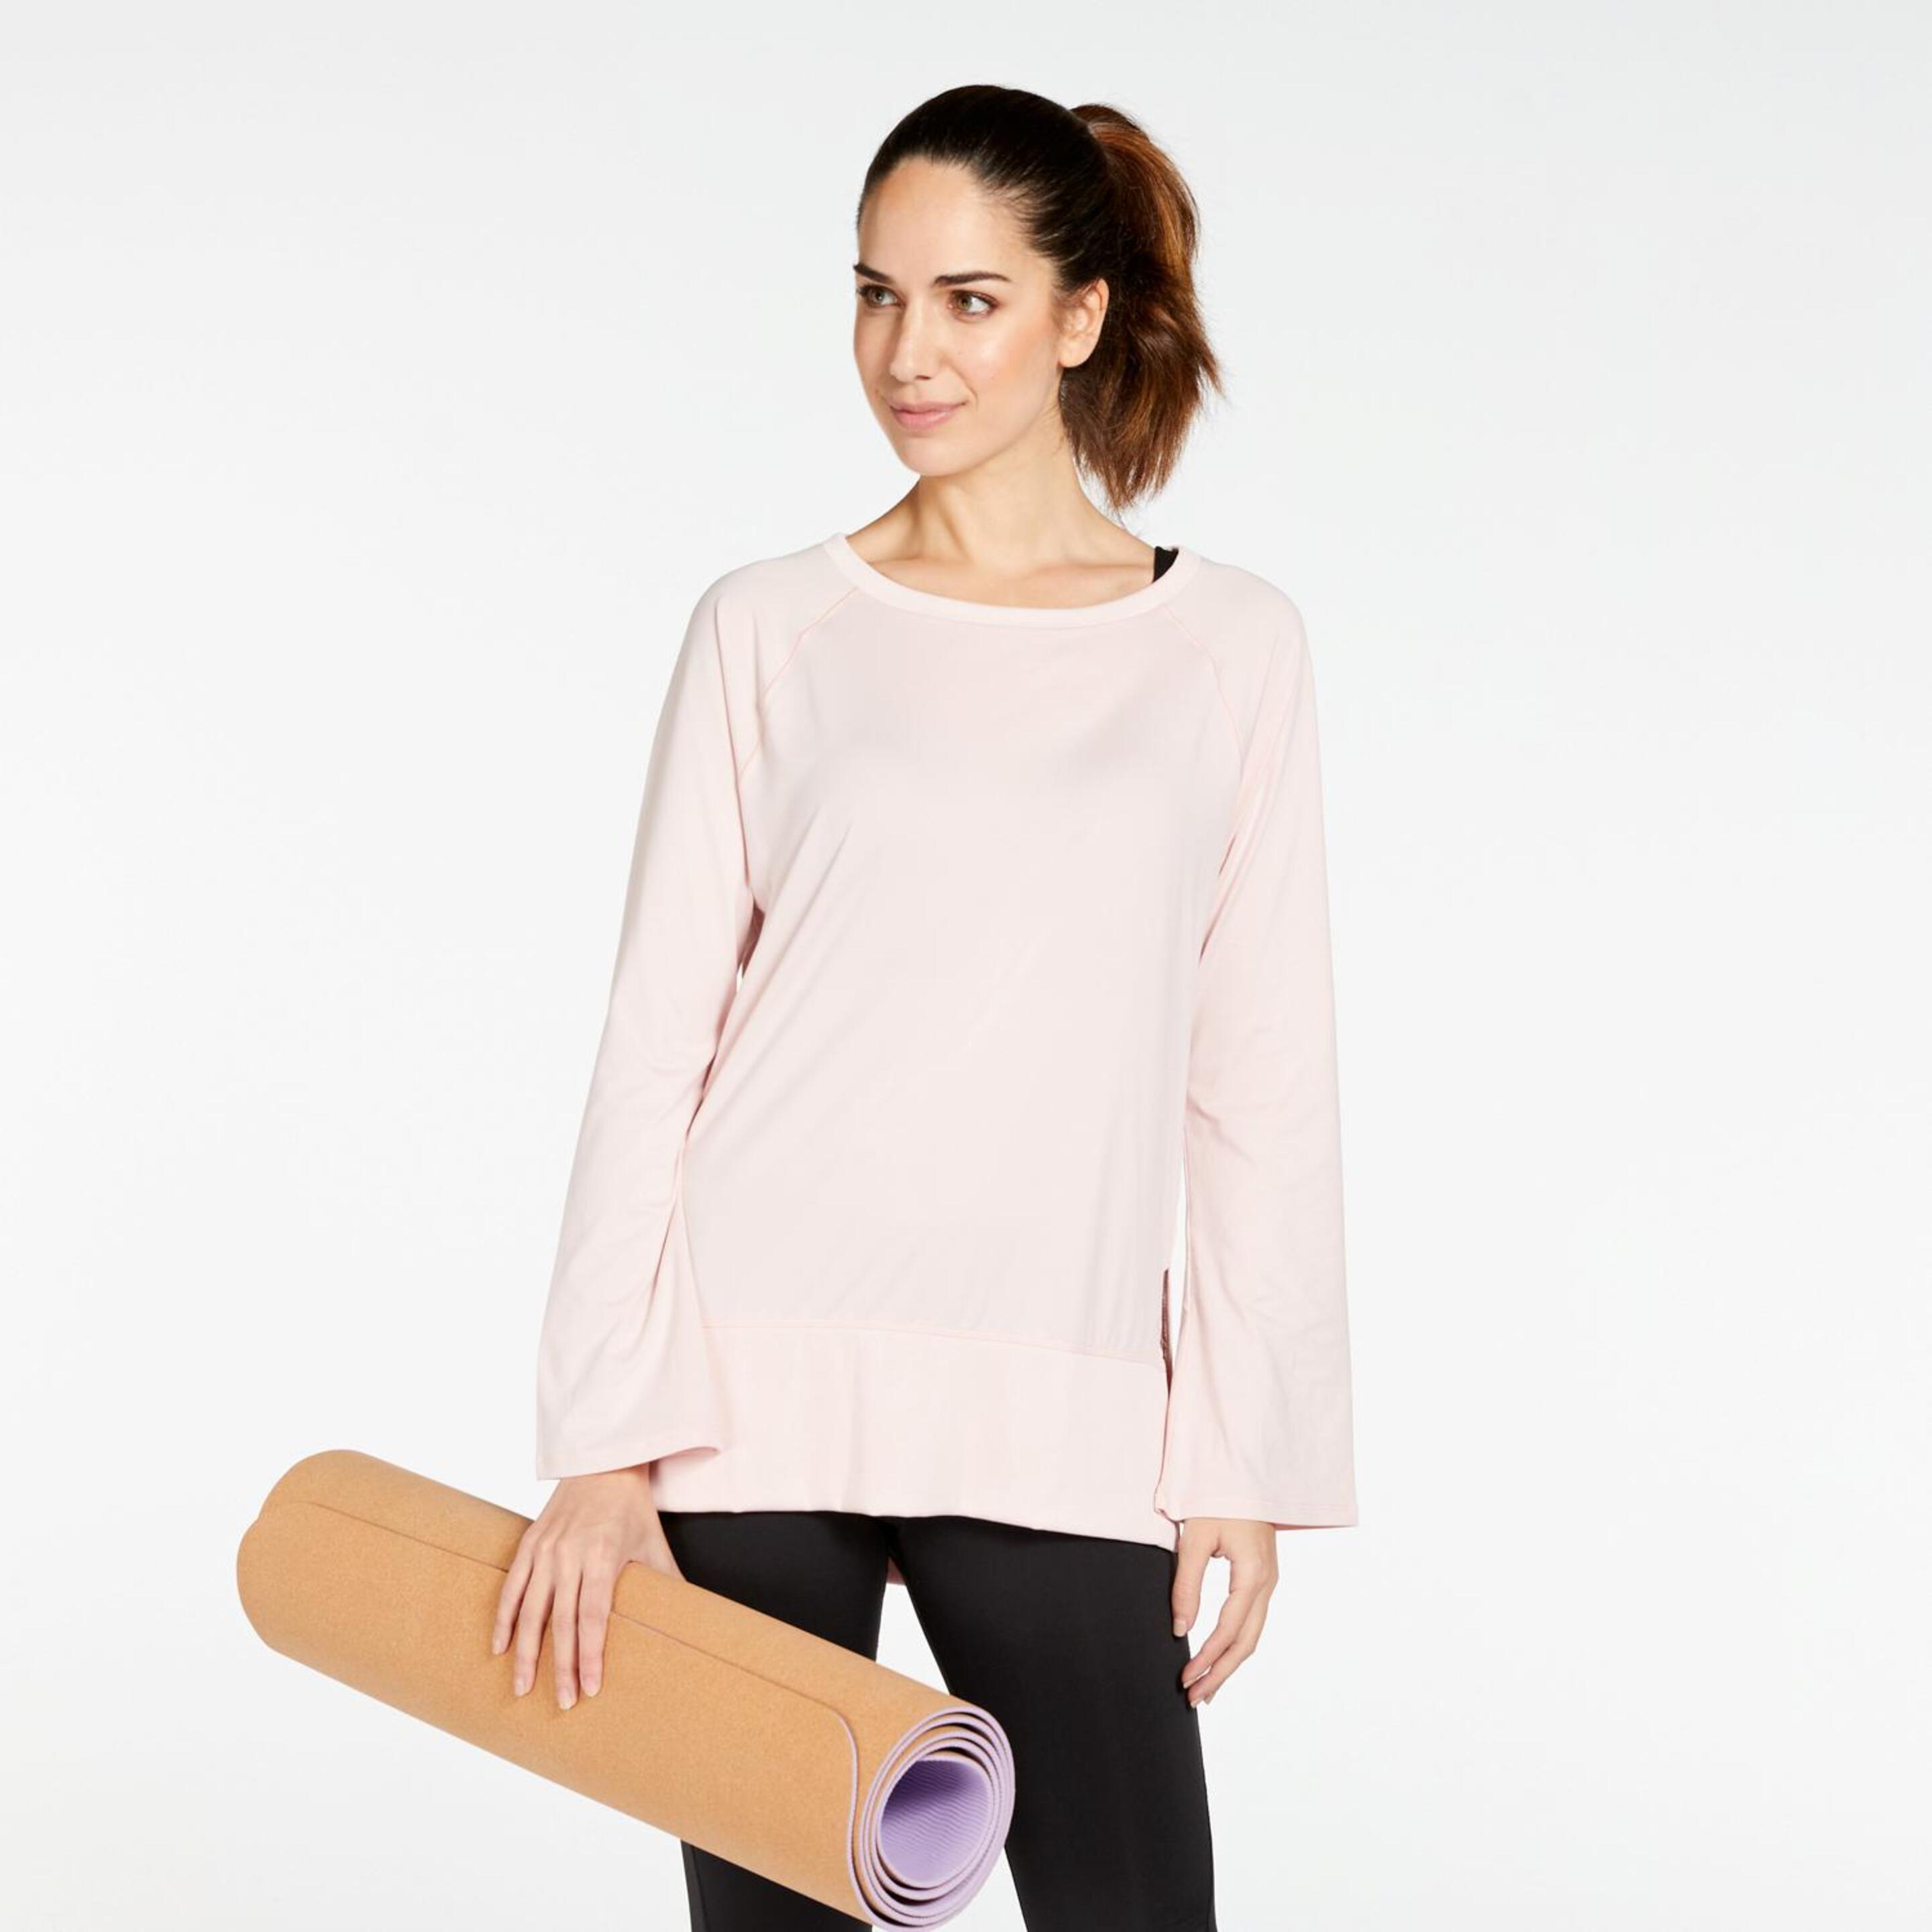 Puma Studio Yogini - rosa - Camiseta Yoga Mujer